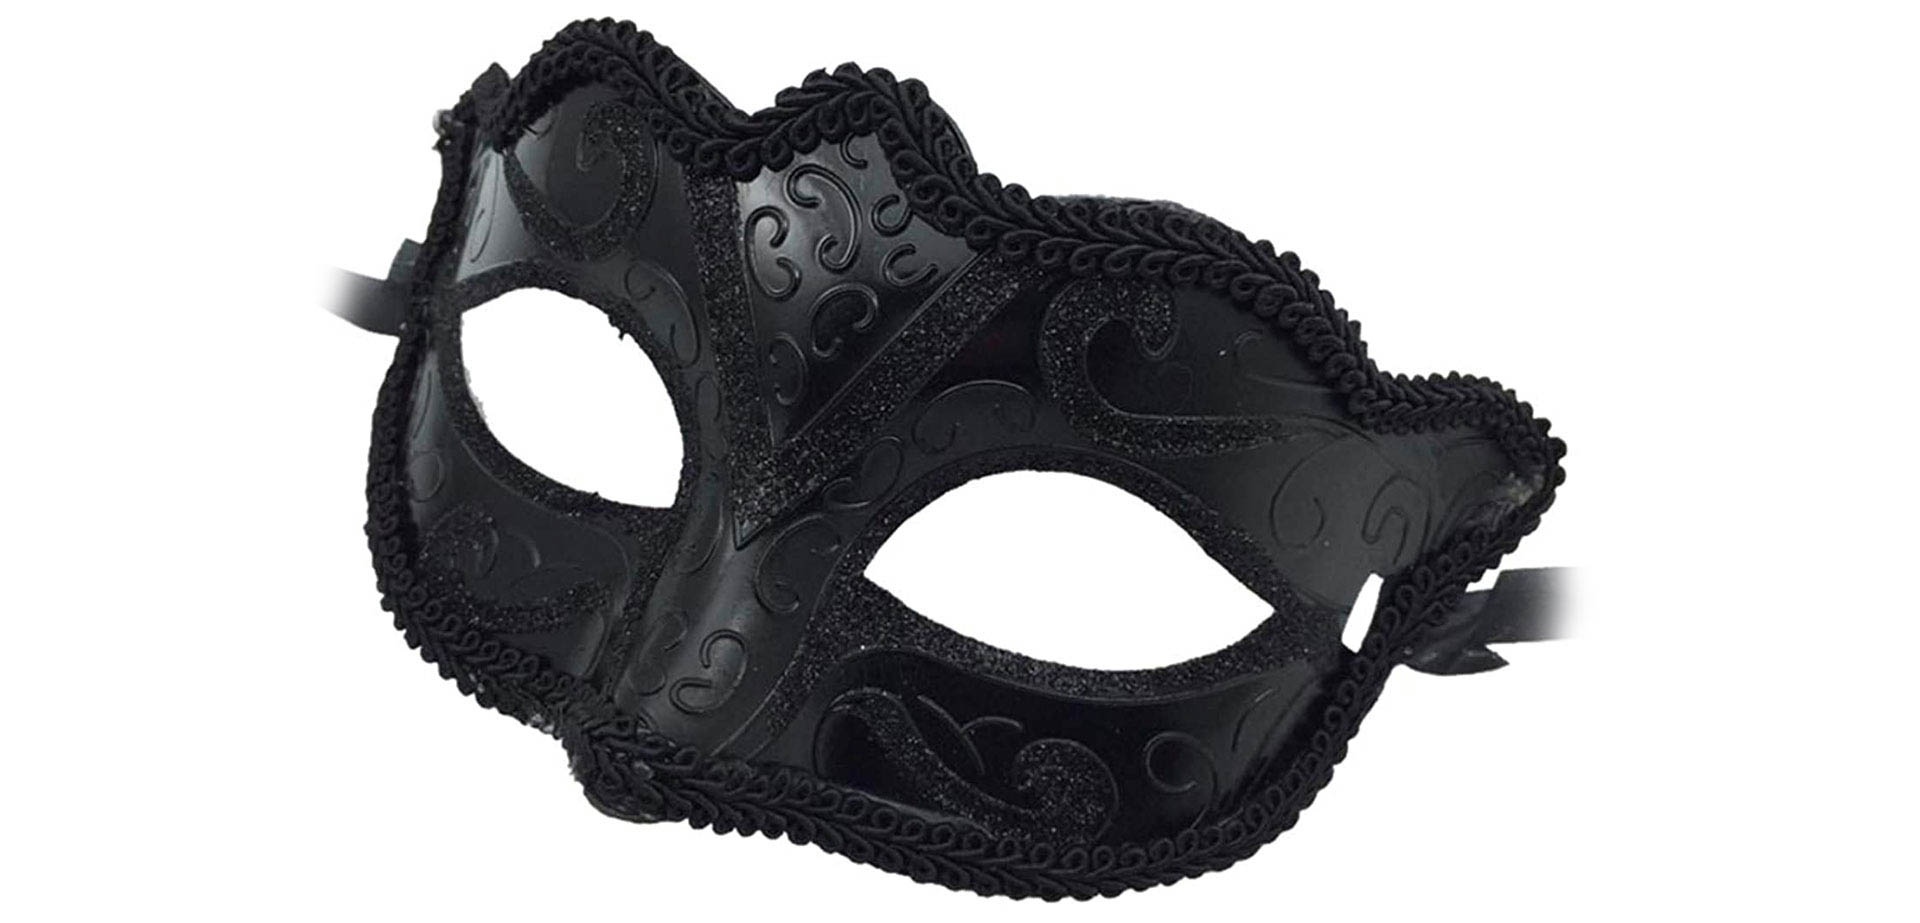 Black Masquerade sex mask.